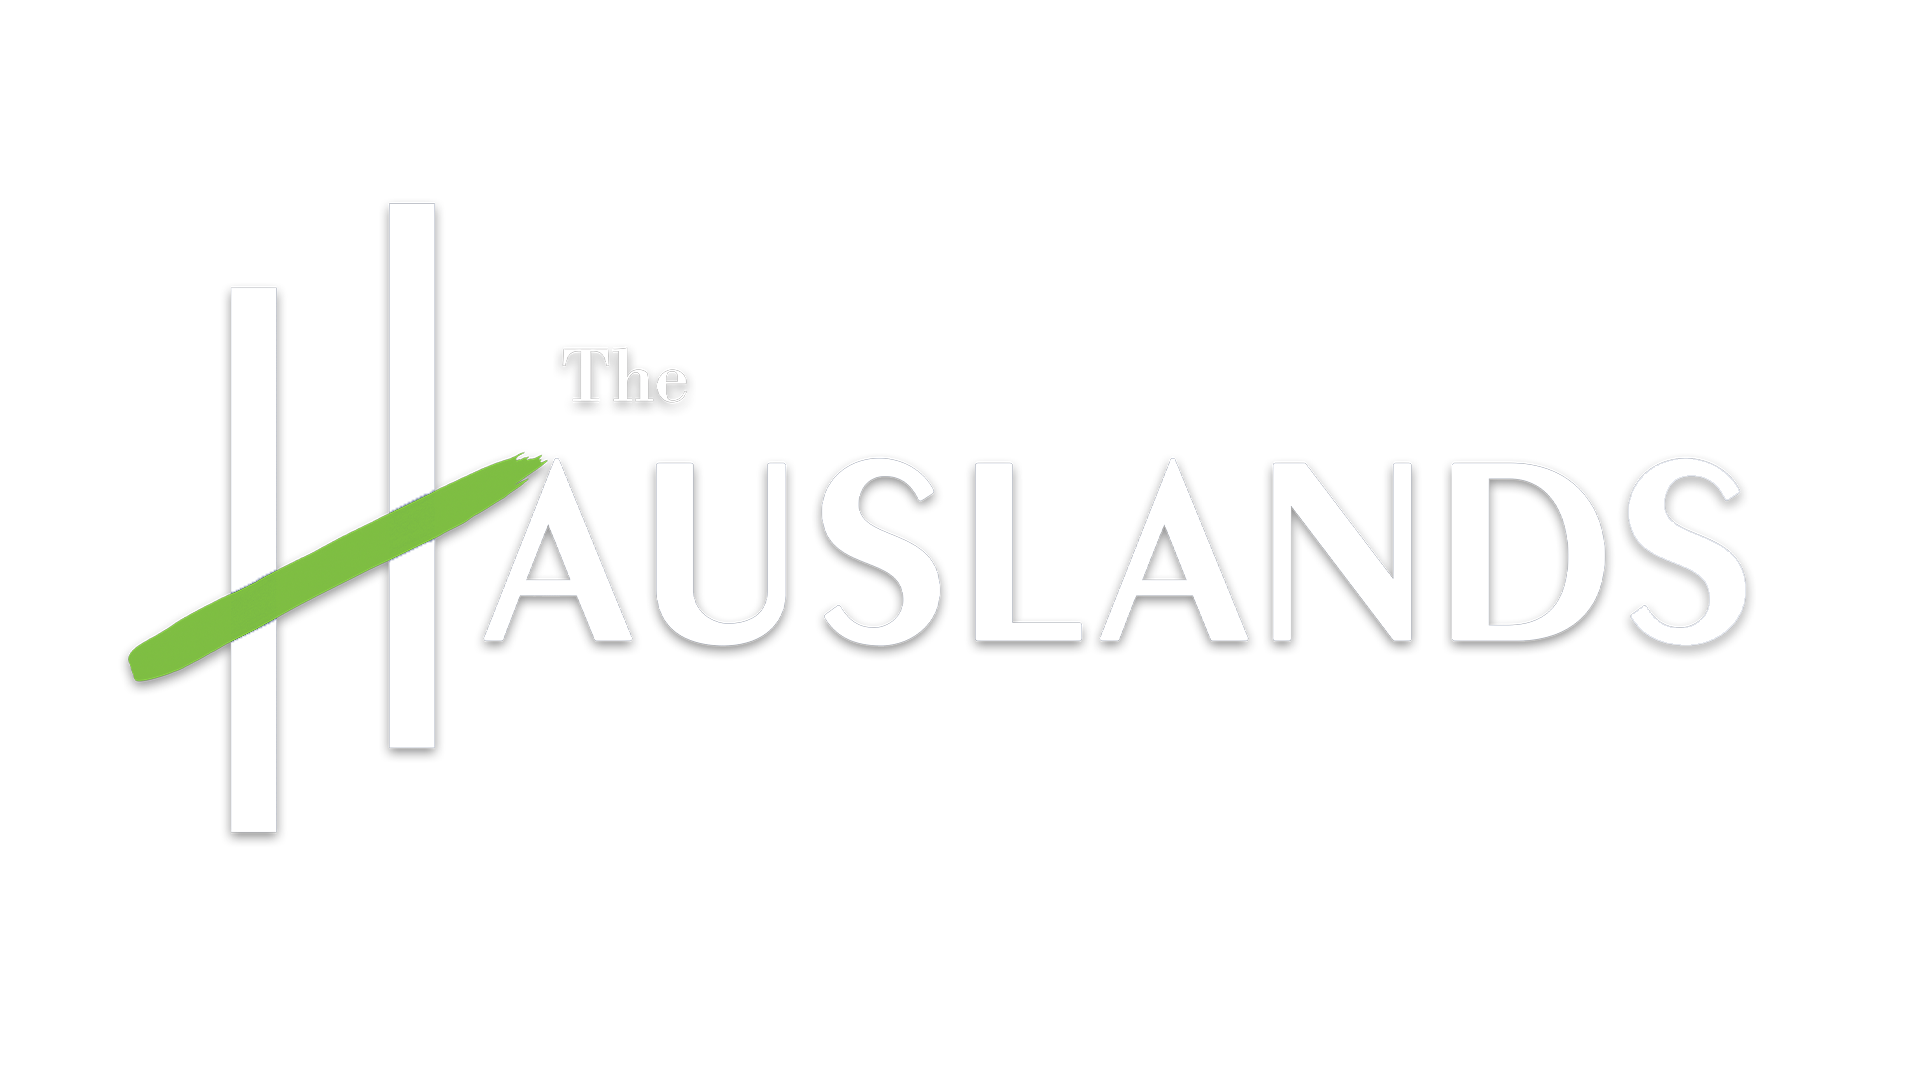 The Hauslands Subic